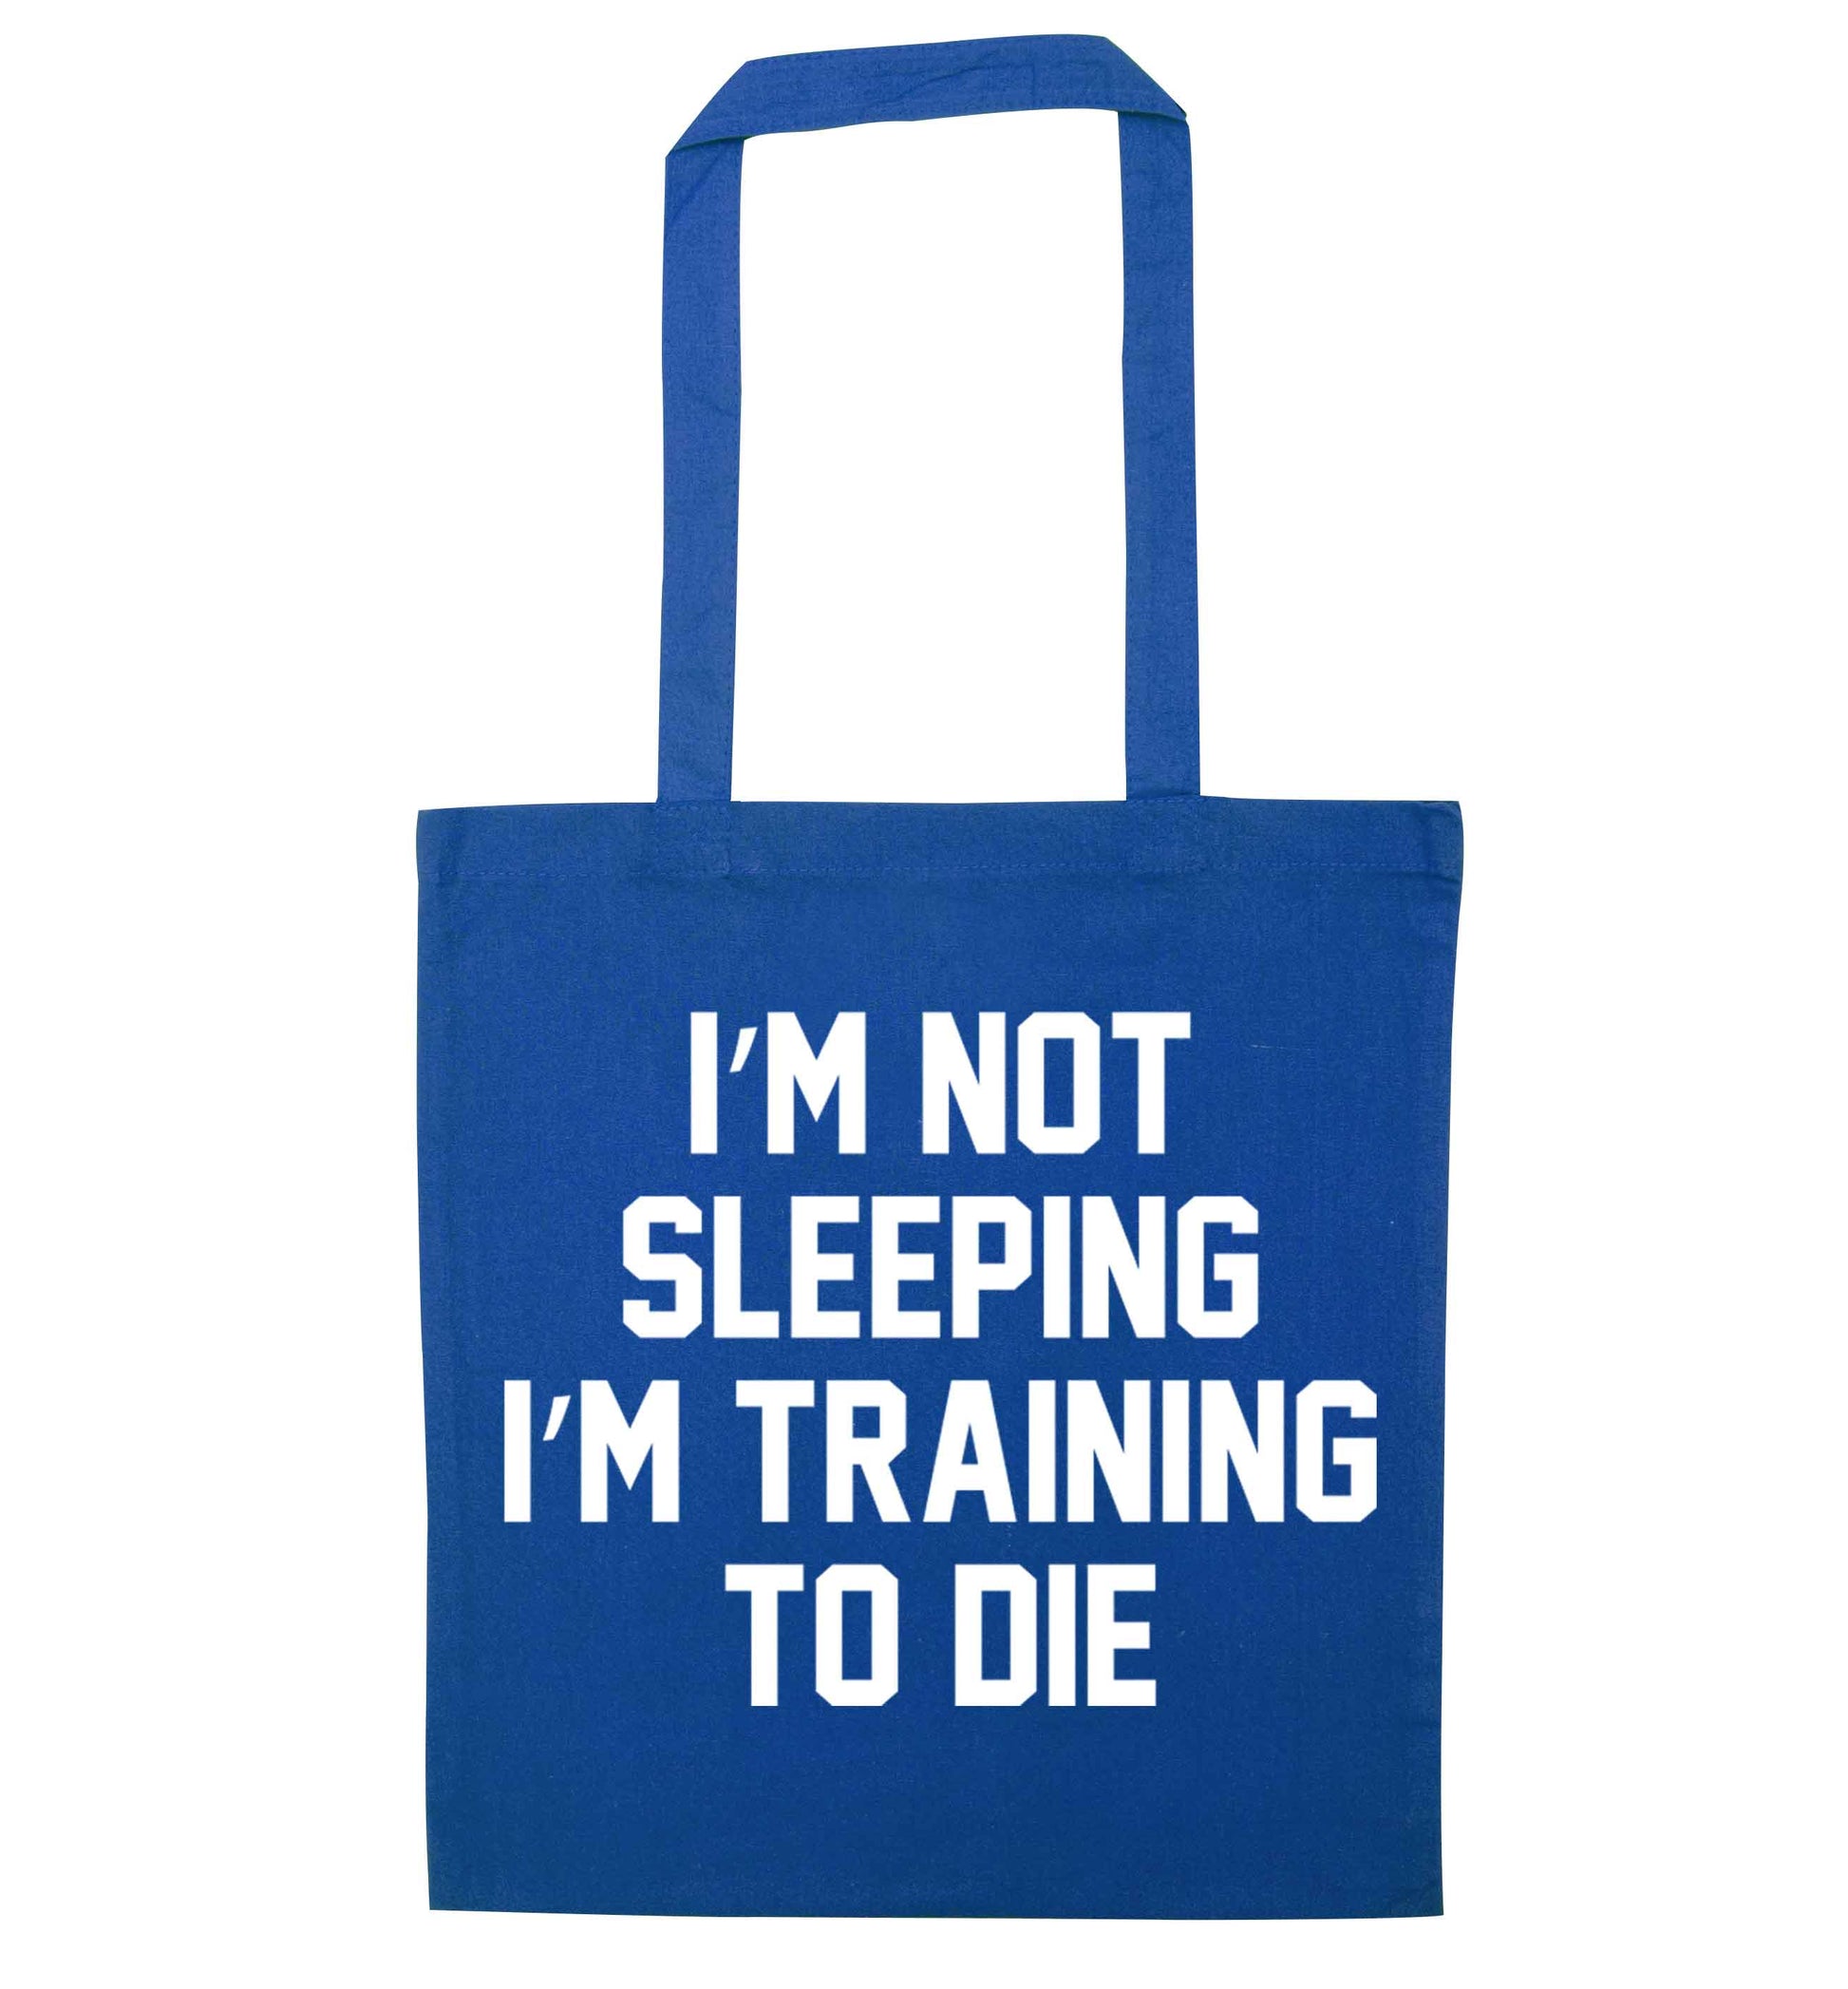 I'm not sleeping I'm training to die blue tote bag